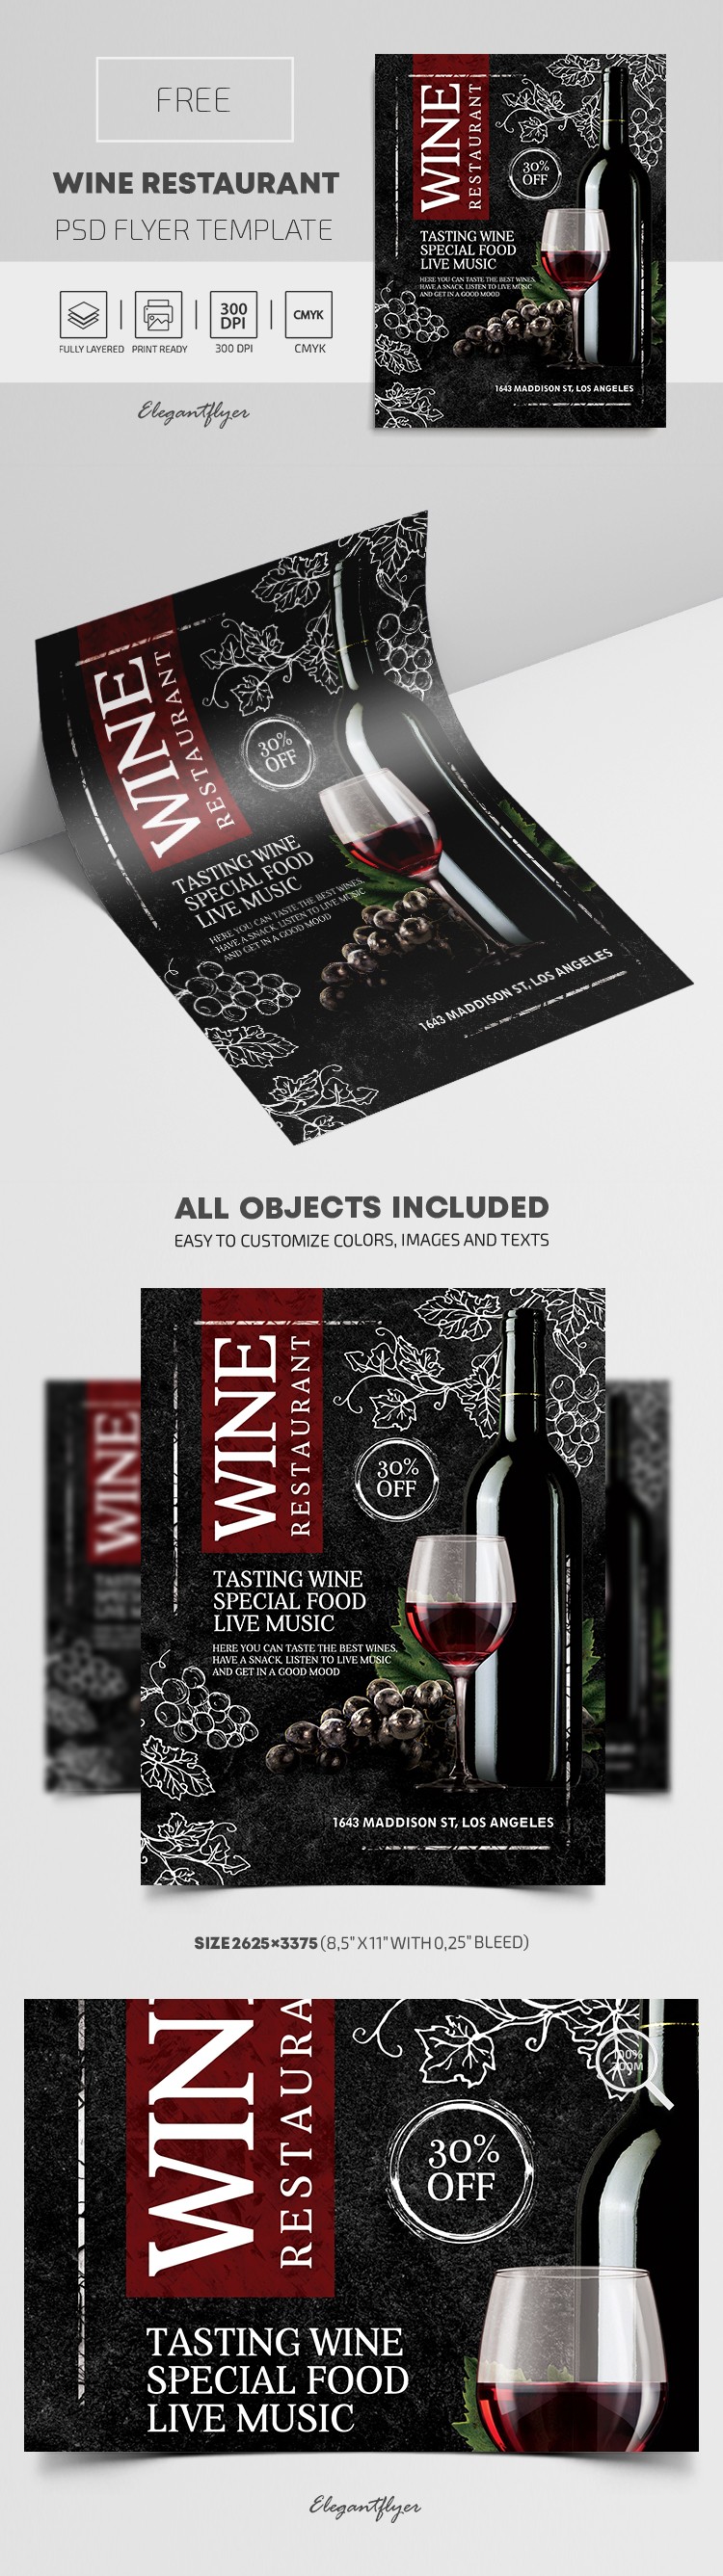 Wine Restaurant Flyer by ElegantFlyer